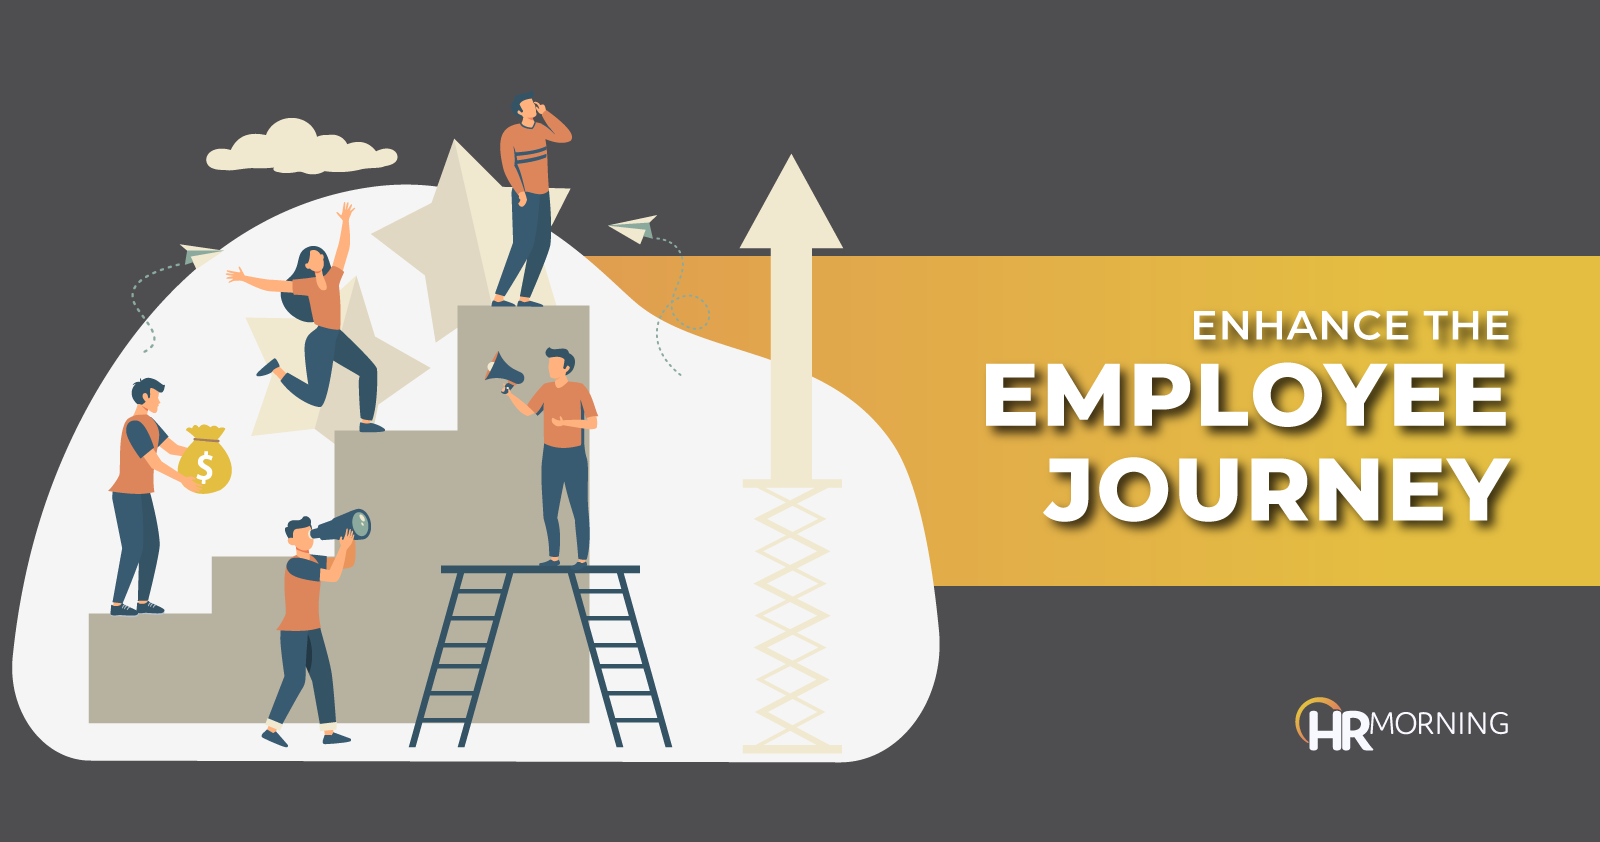 Enhance the employee journey